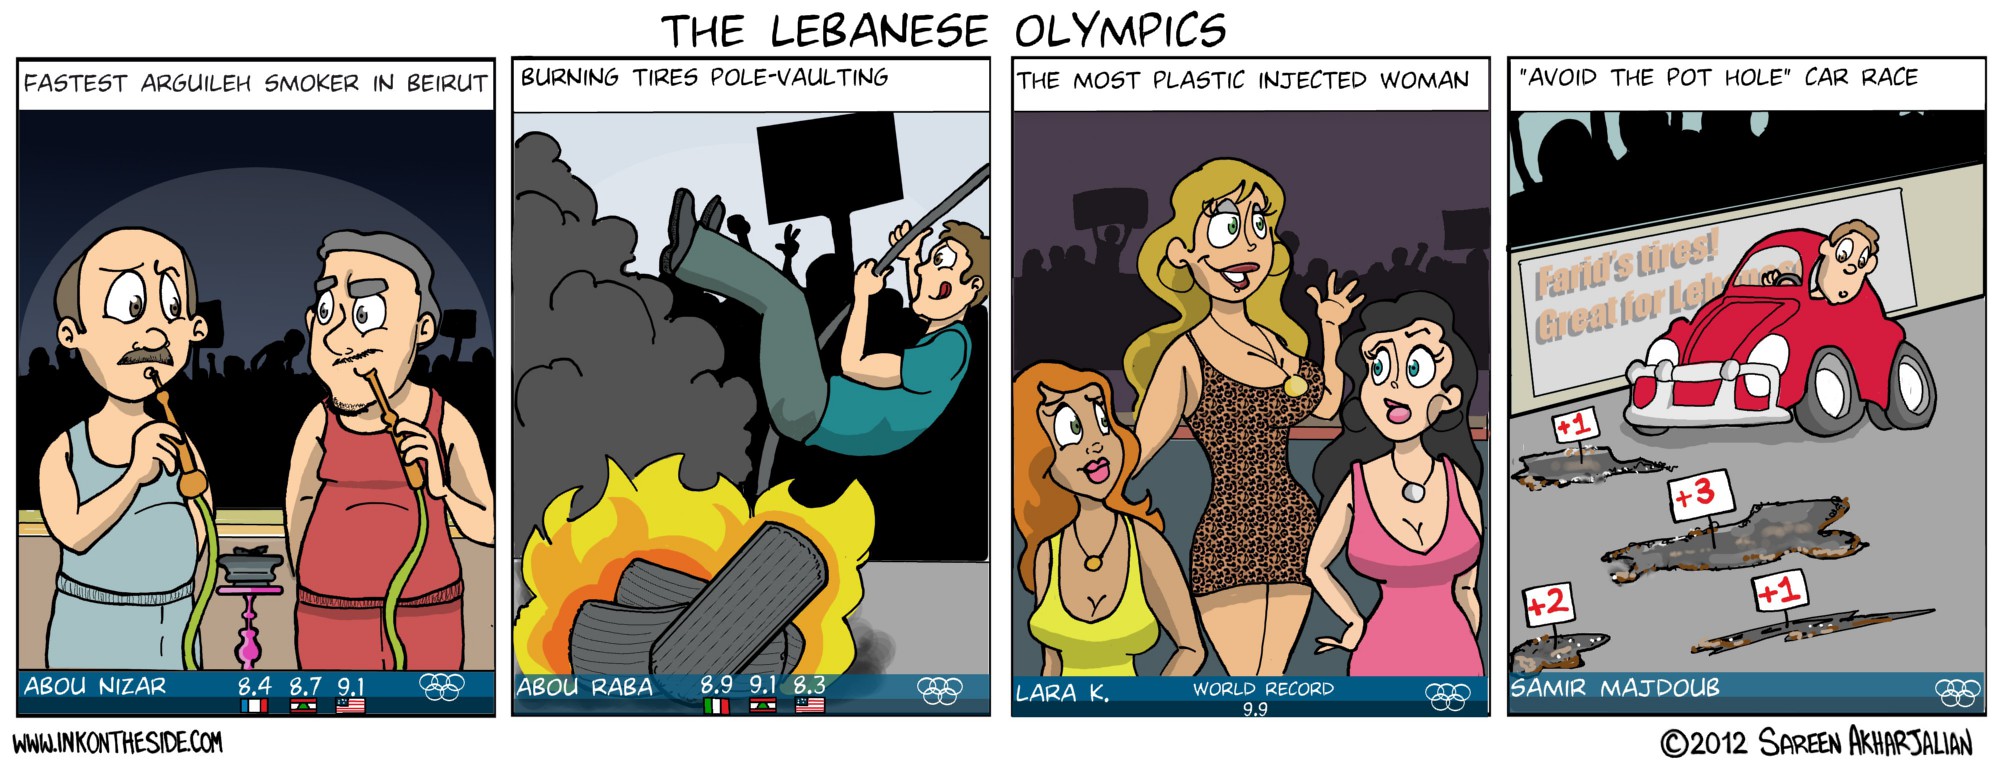 The LEBANESE Olympics!